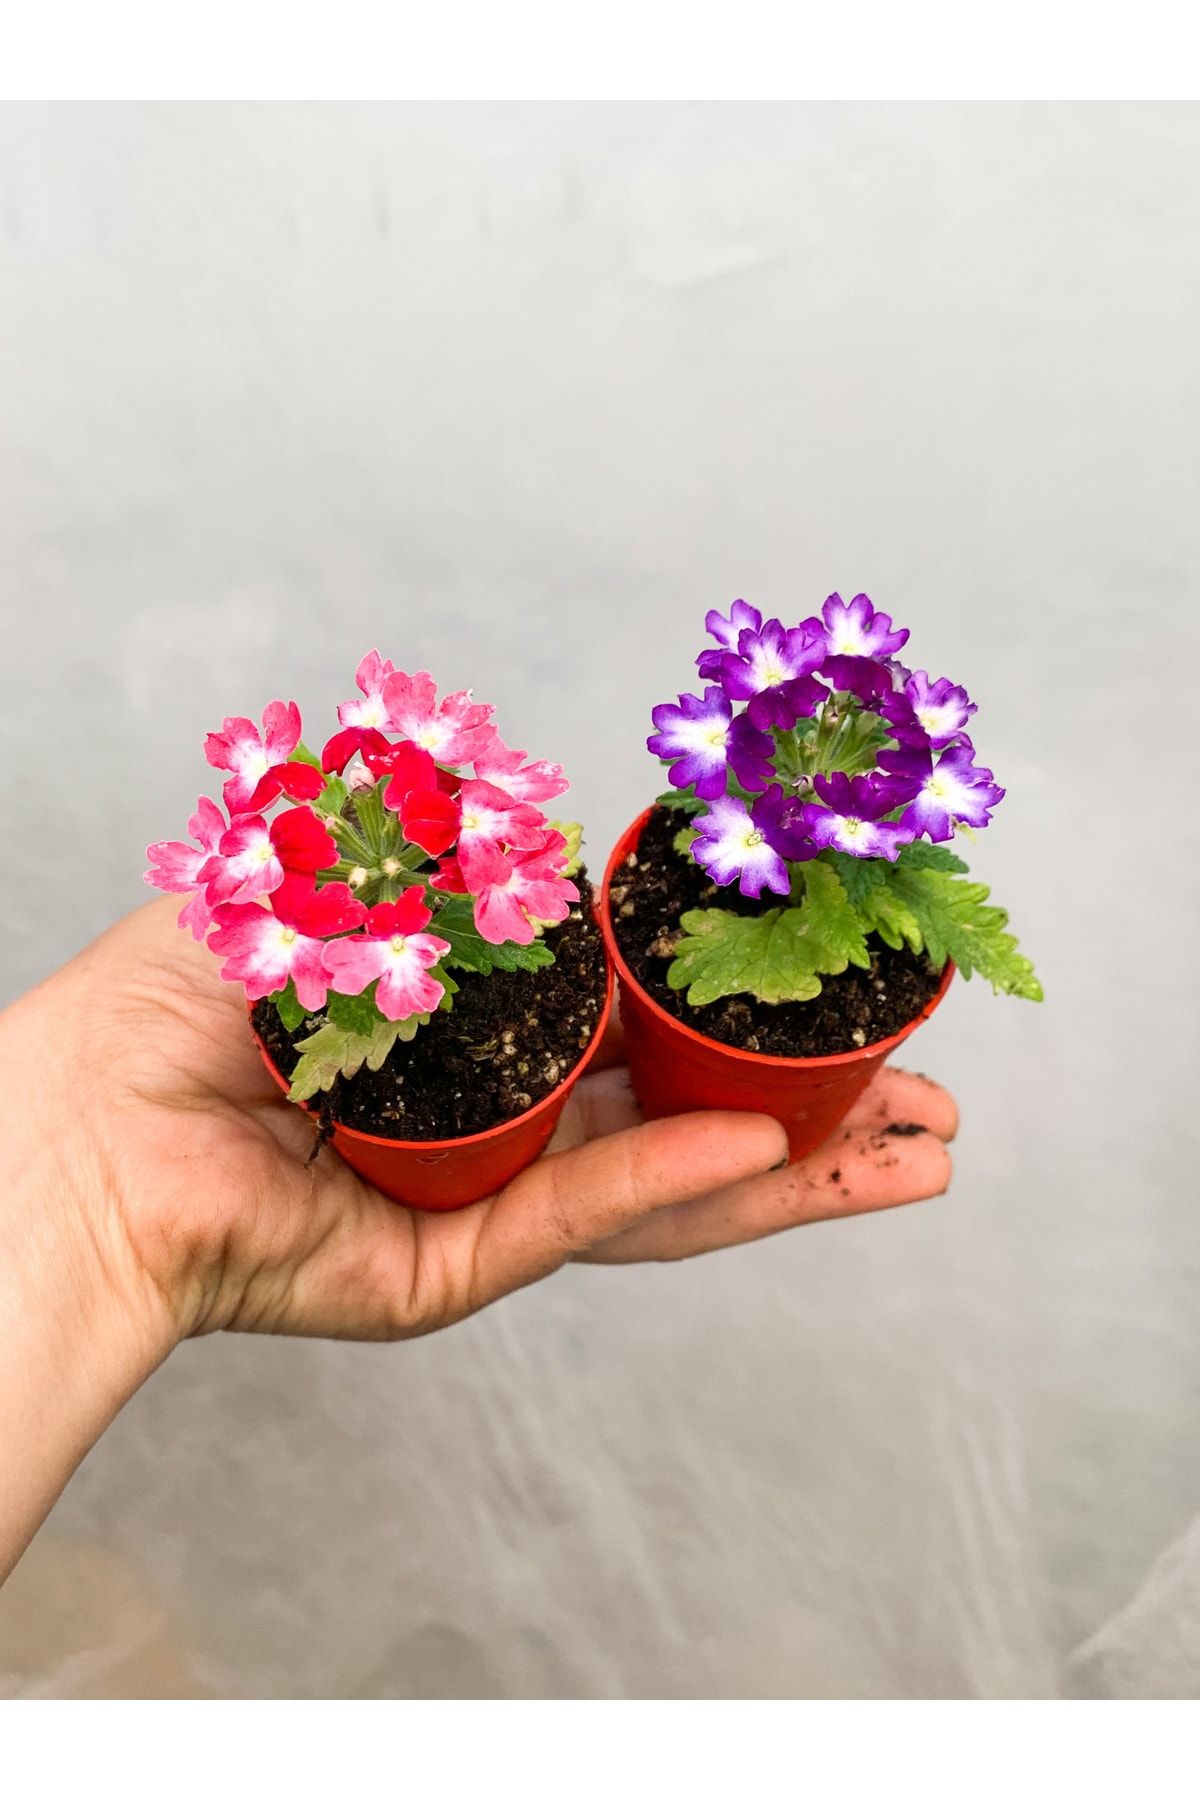 RetroCicekcilik Serada Decor Plant Mini Saksıda 2 Adet Mine Çiçeği Verbena Çiçekli Bodur Bitki